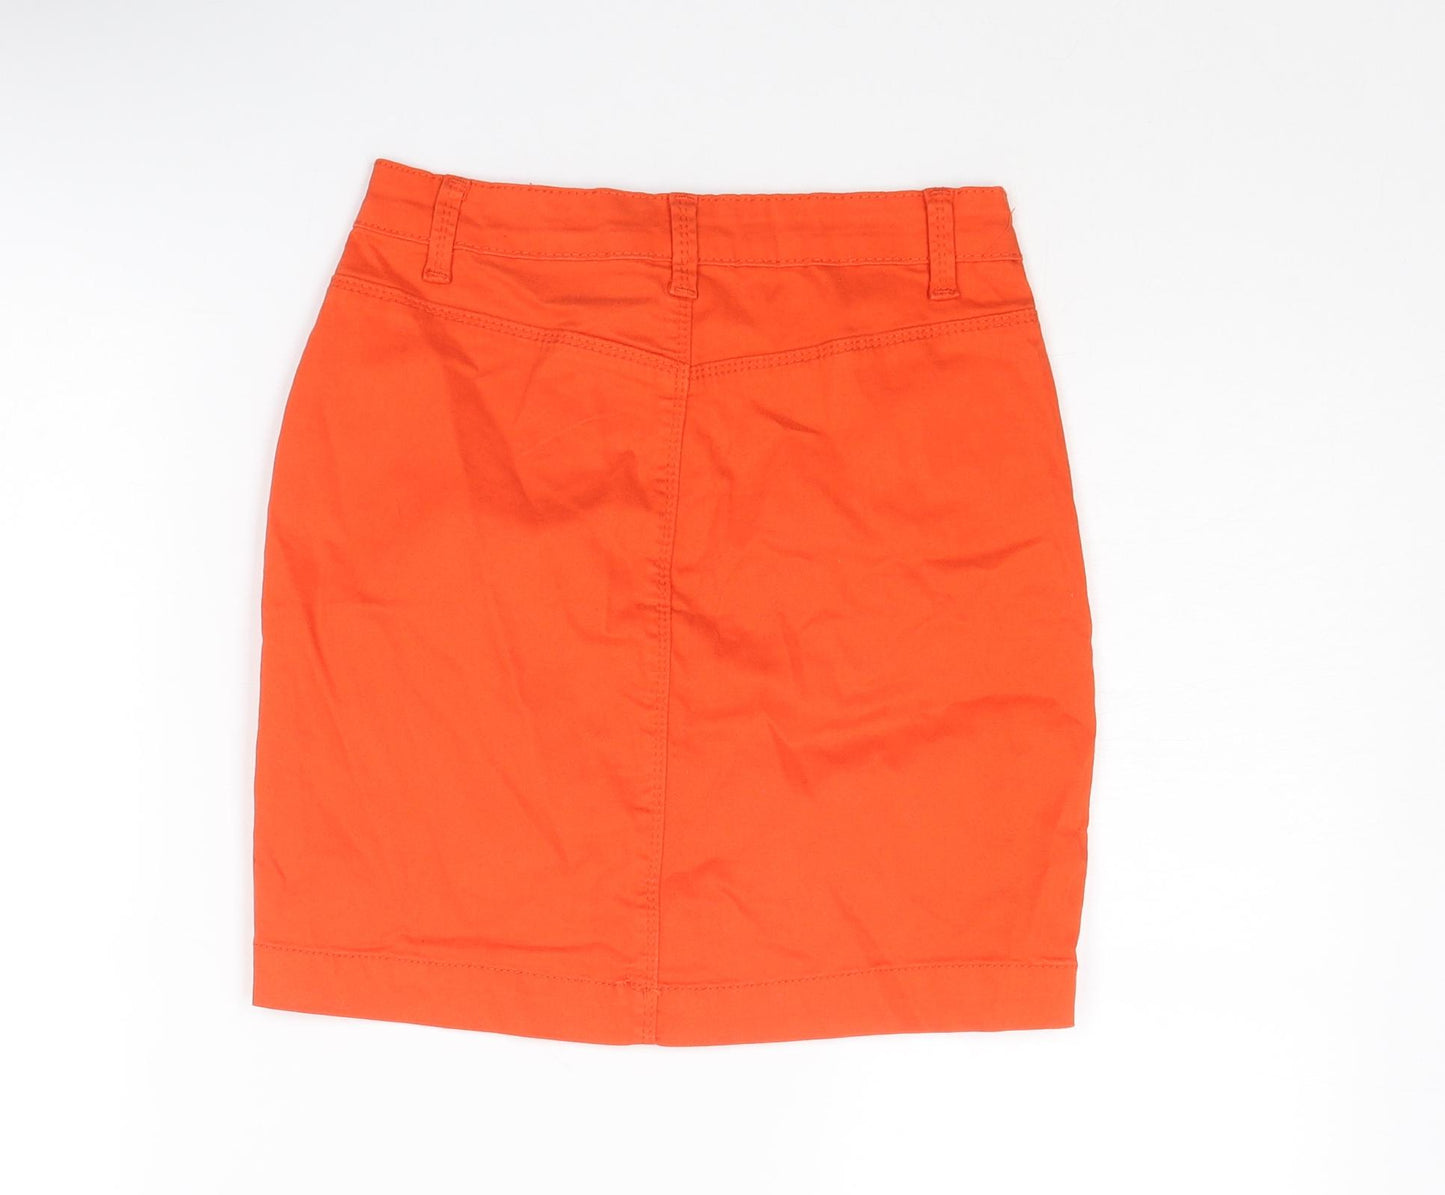 Missguided Womens Orange Cotton A-Line Skirt Size 8 Zip